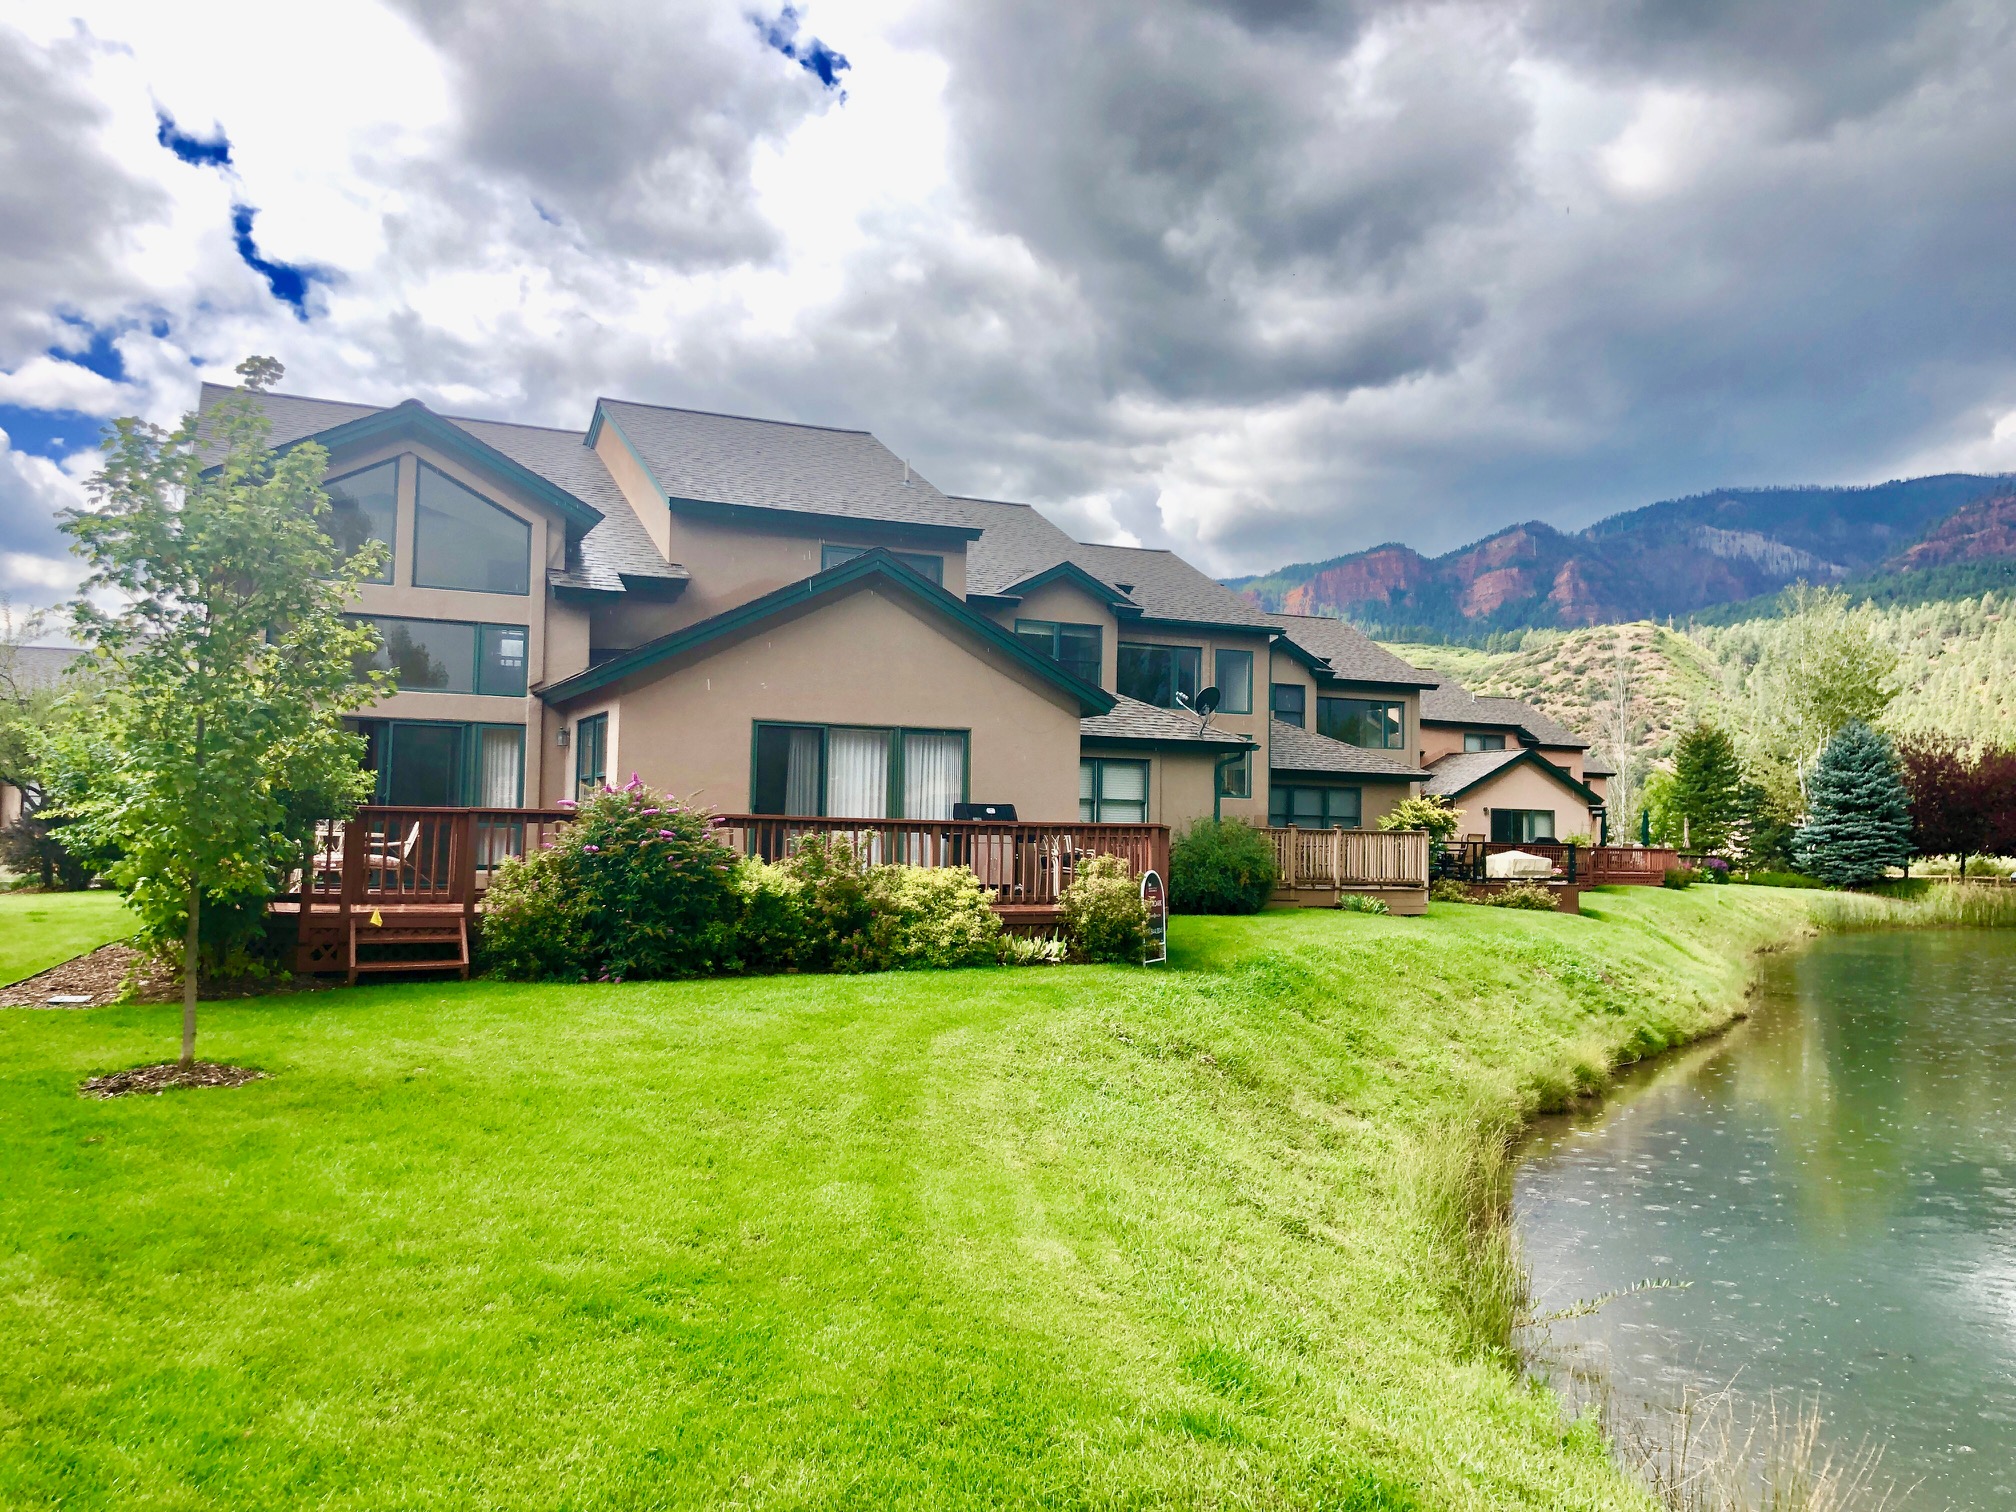 one of our luxury vacation rentals in Durango, Colorado